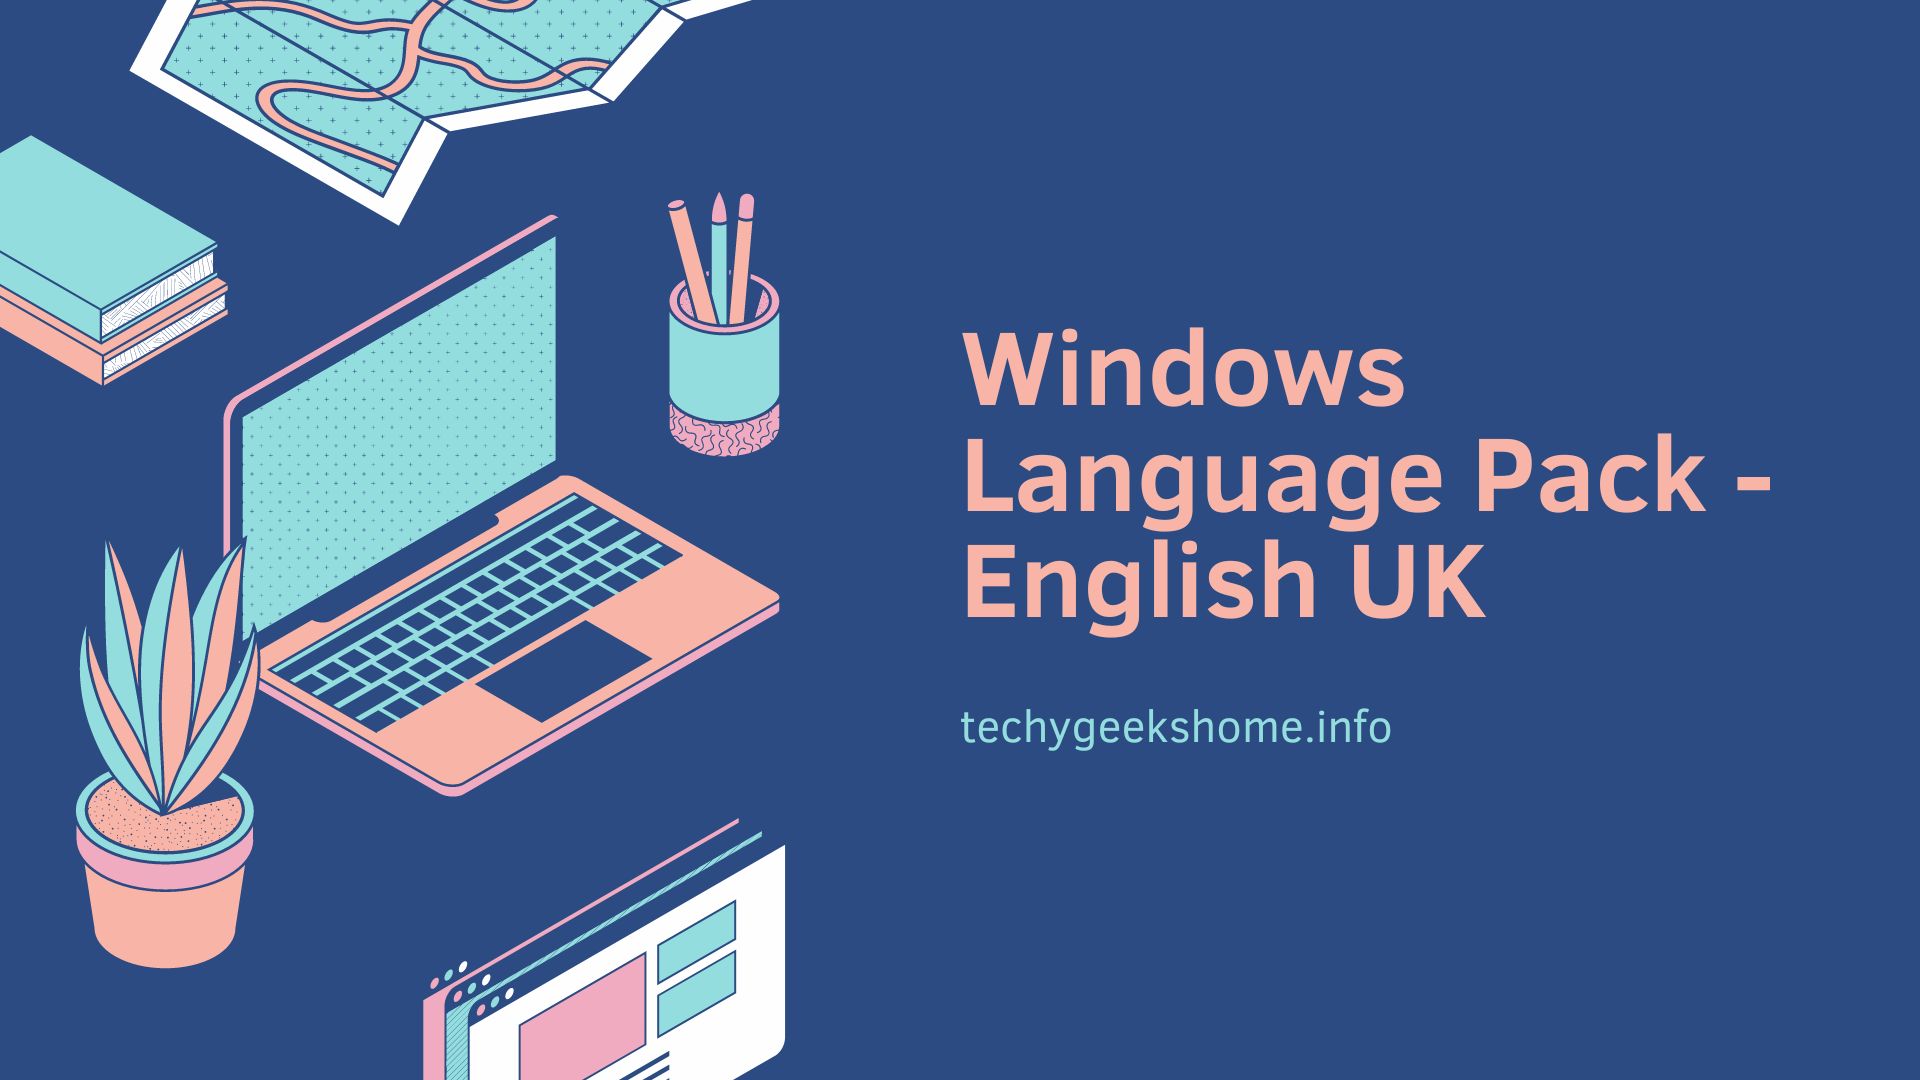 Windows Language Pack - English UK